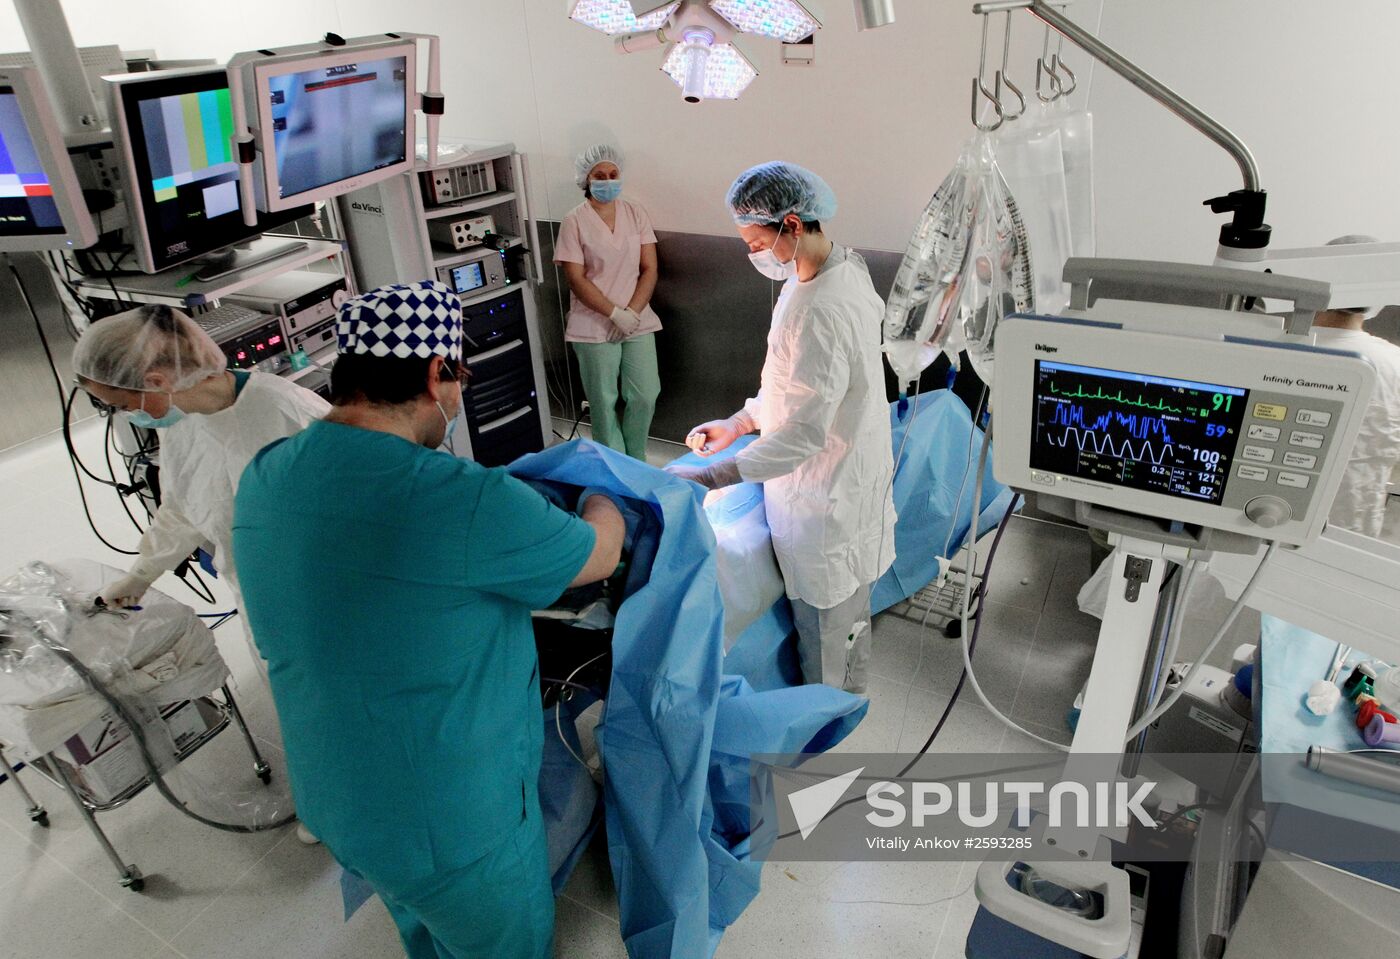 Operation assisted by Da Vinci Surgical System in Vladivostok